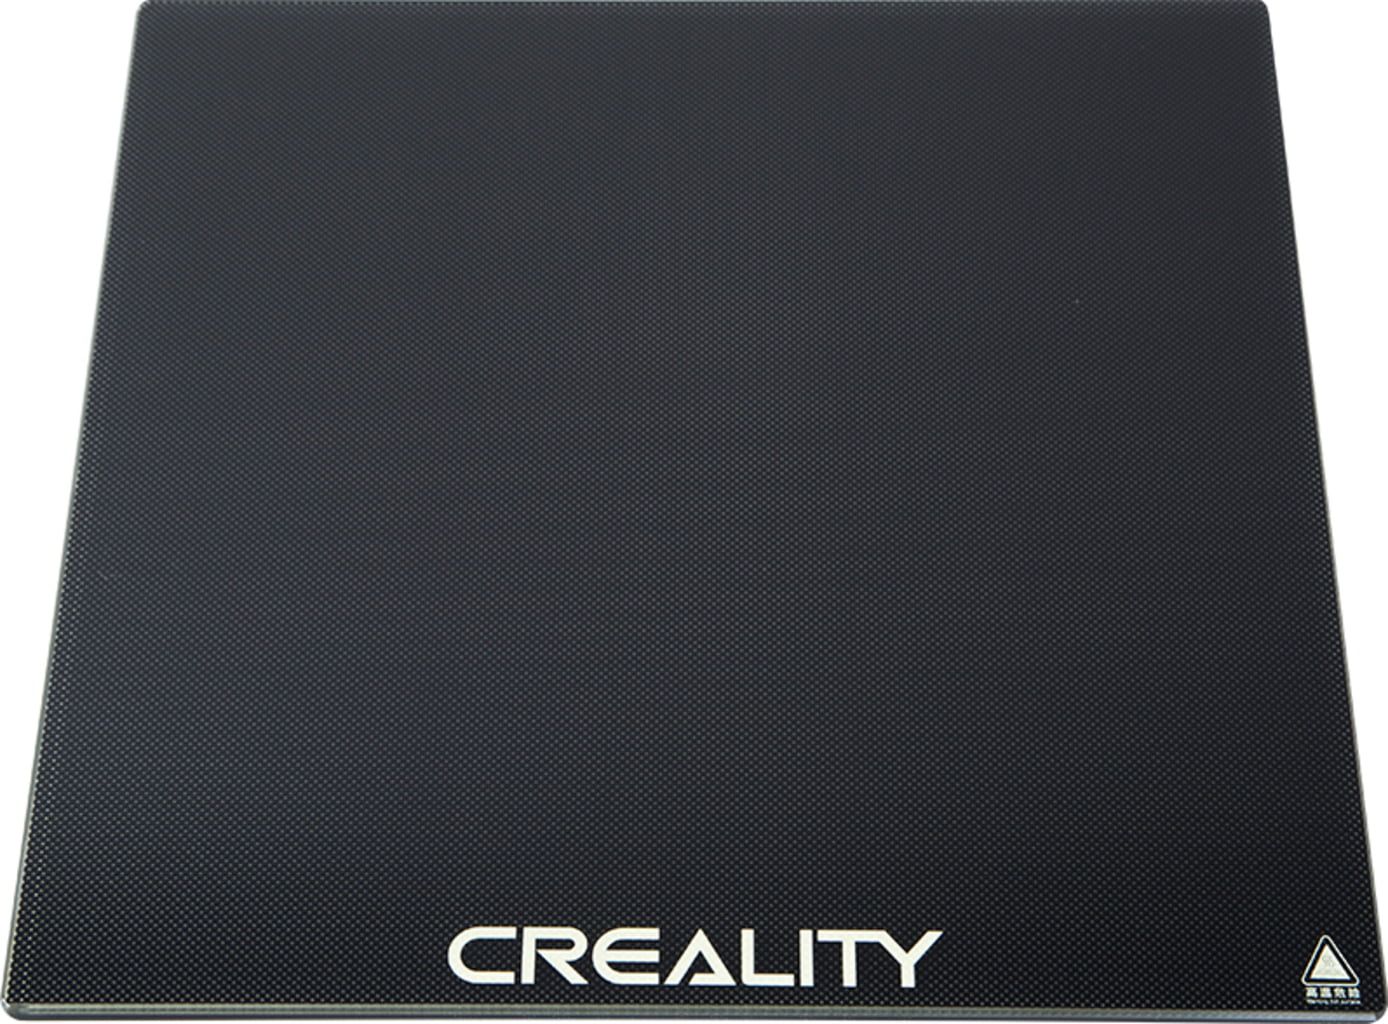 Creality Carborundum glasplatta - Ender 3